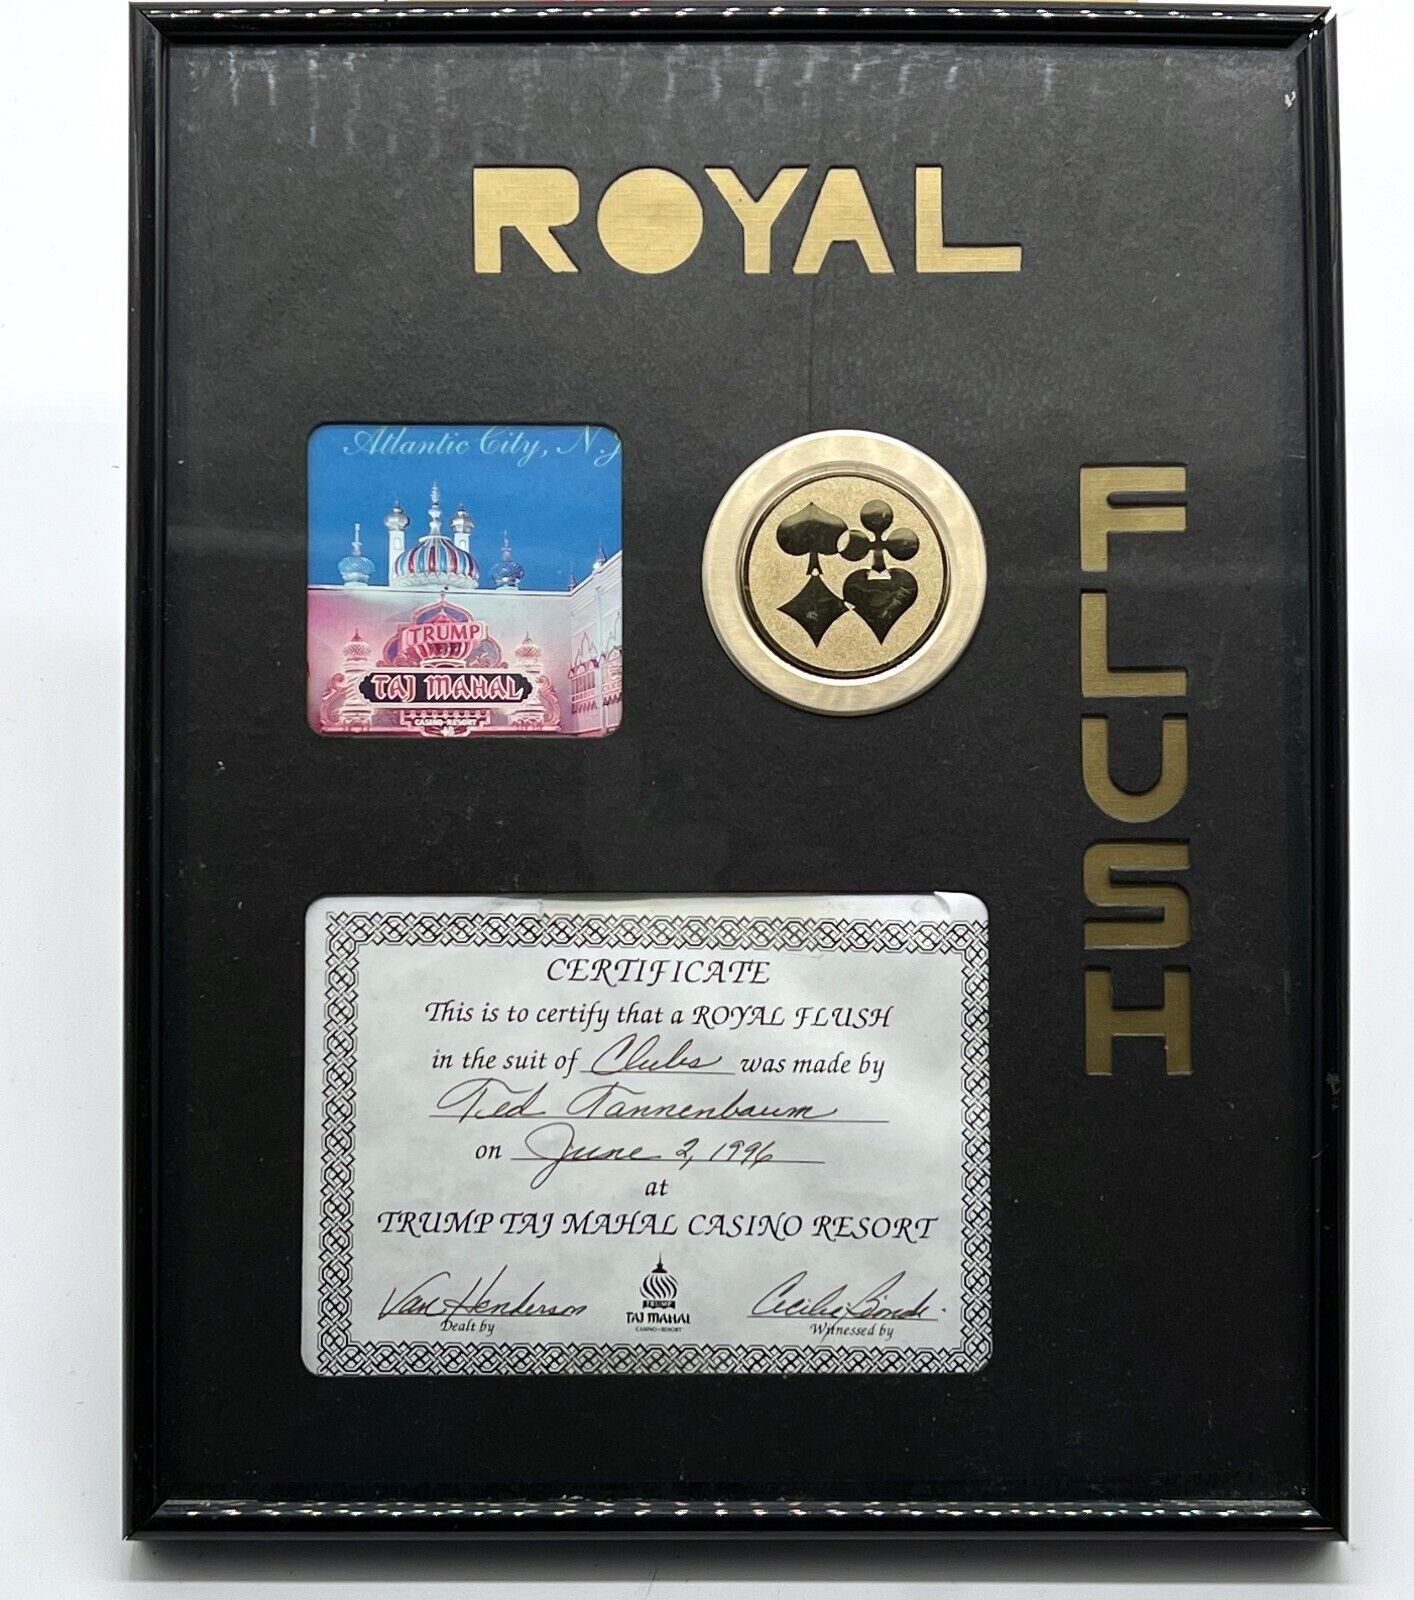 Trump Taj Mahal Casino Resort Vintage Framed Certificate - ROYAL FLUSH - 1996